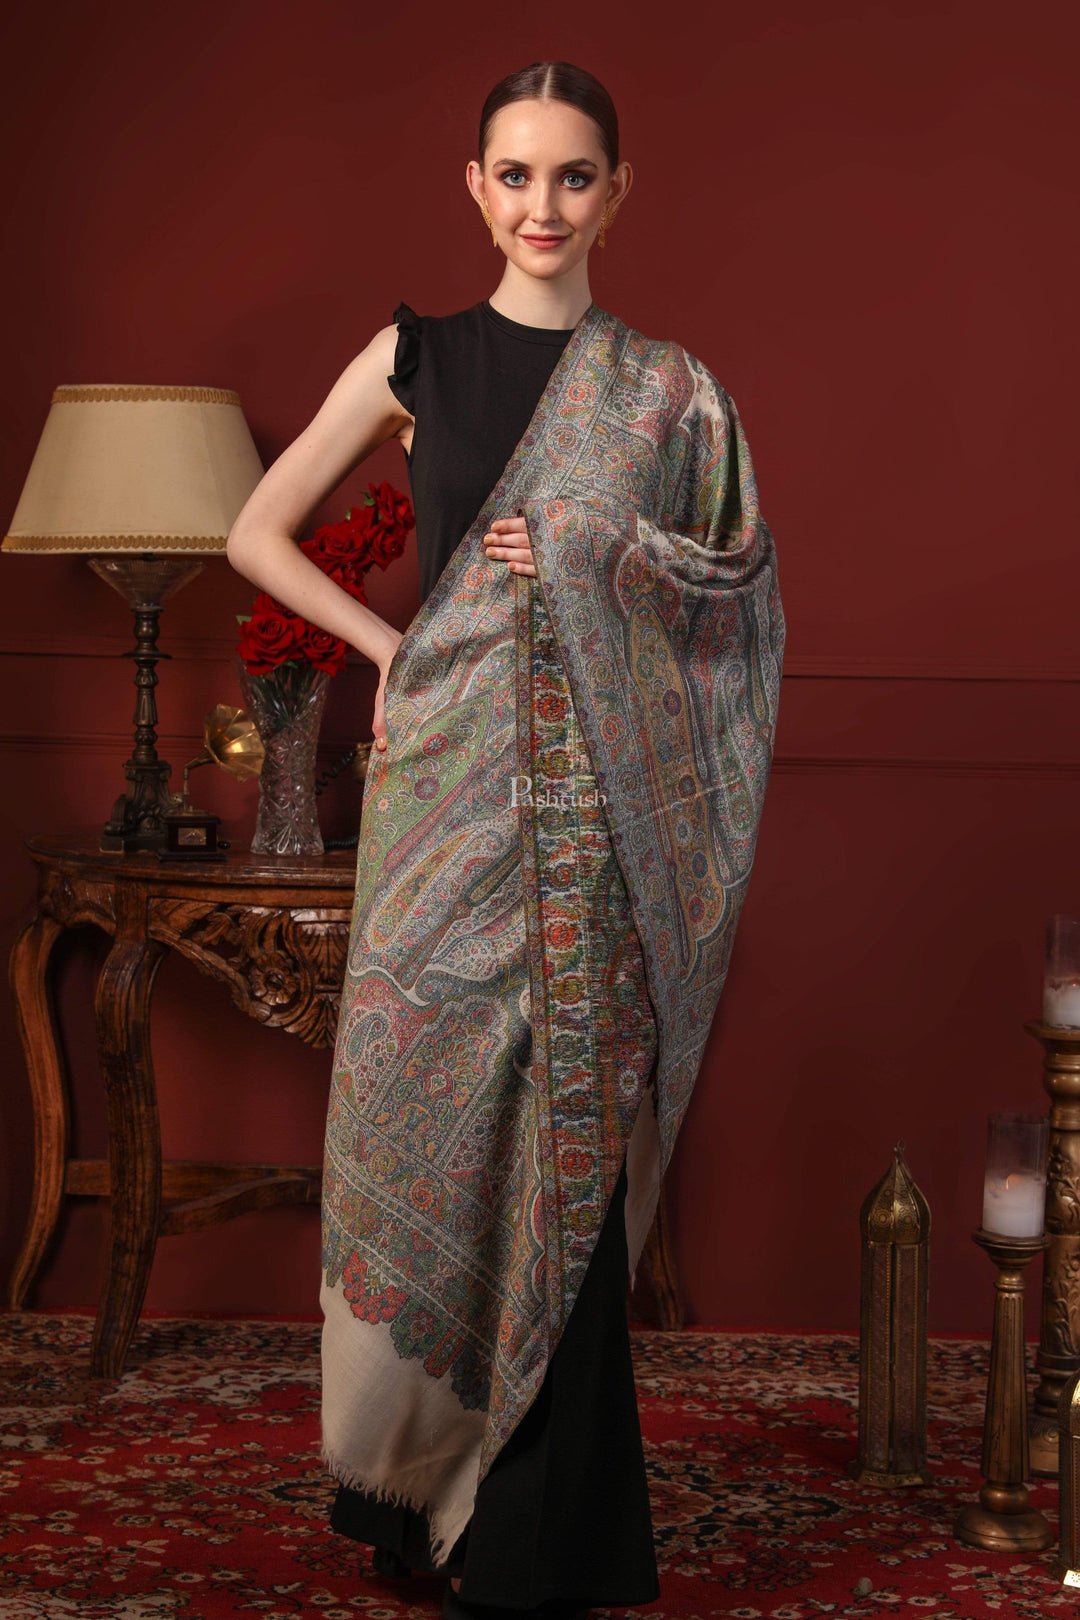 Pashtush India 70x200 Pashtush Womens Ethnic Weave Stole, 100% Pure Wool With Woolmark Certificate